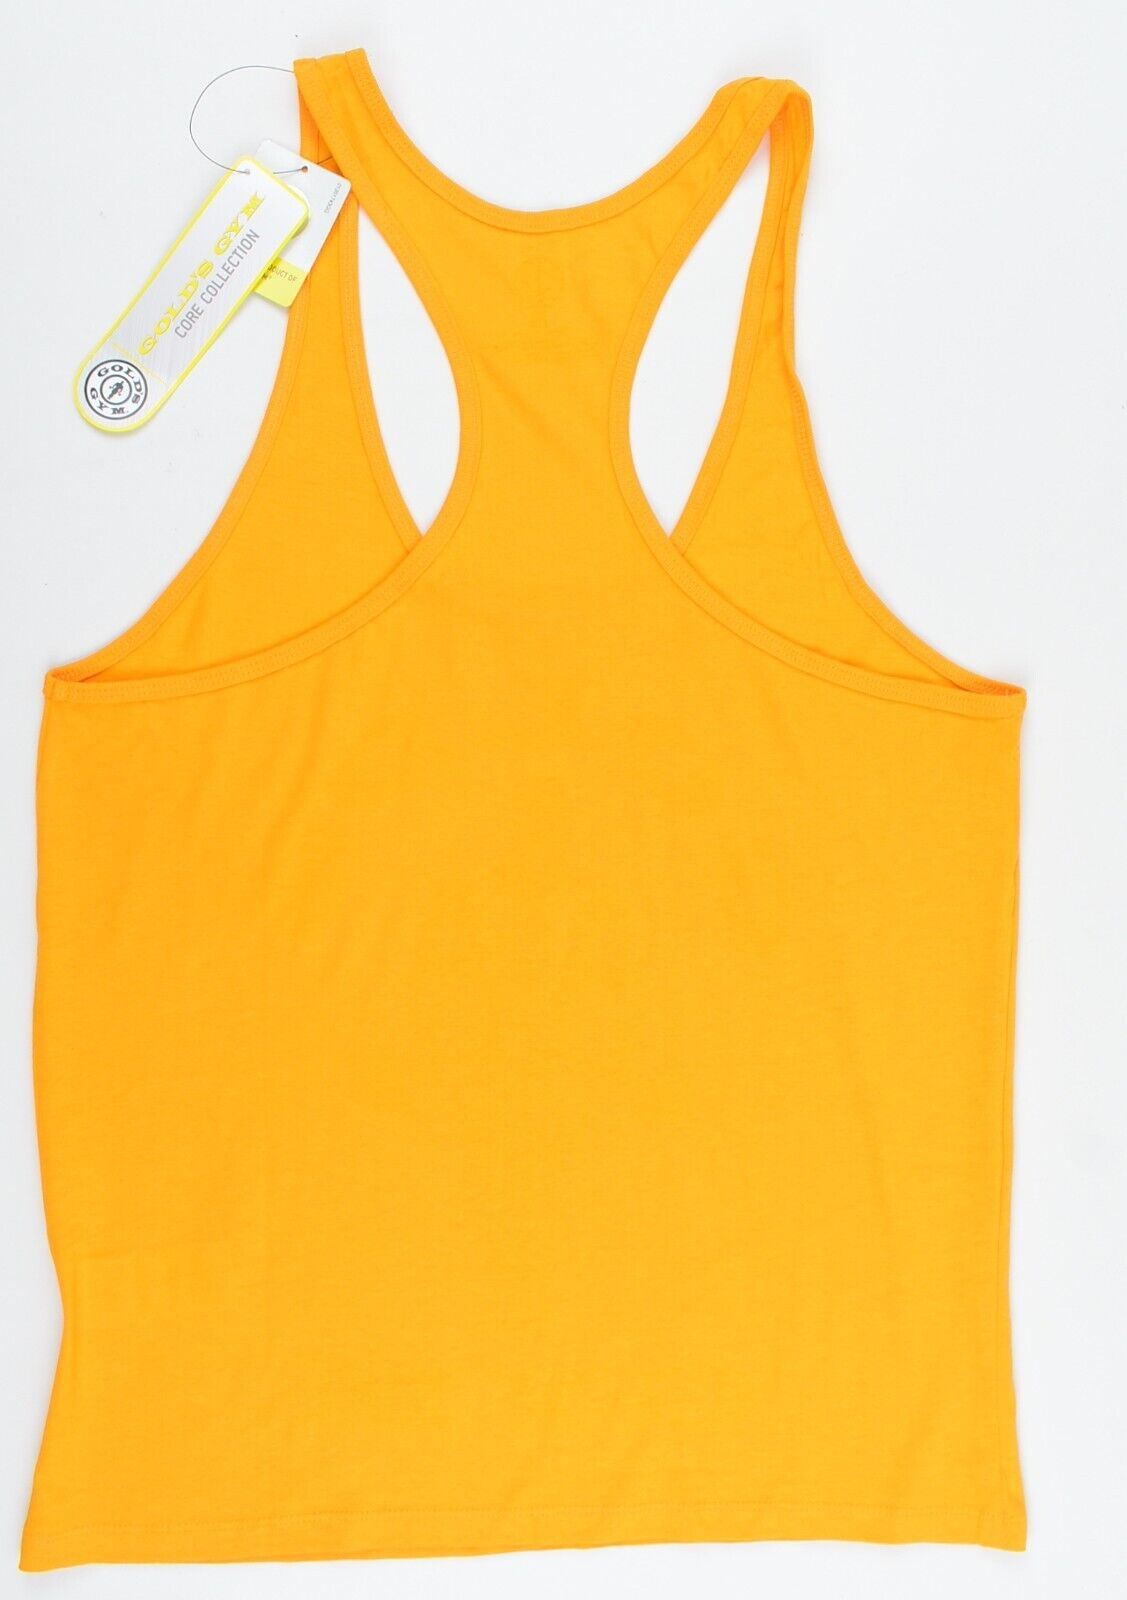 GOLD'S GYM Core Collection Men's MUSCLE JOE Vest Top, Gold Yellow, size XL